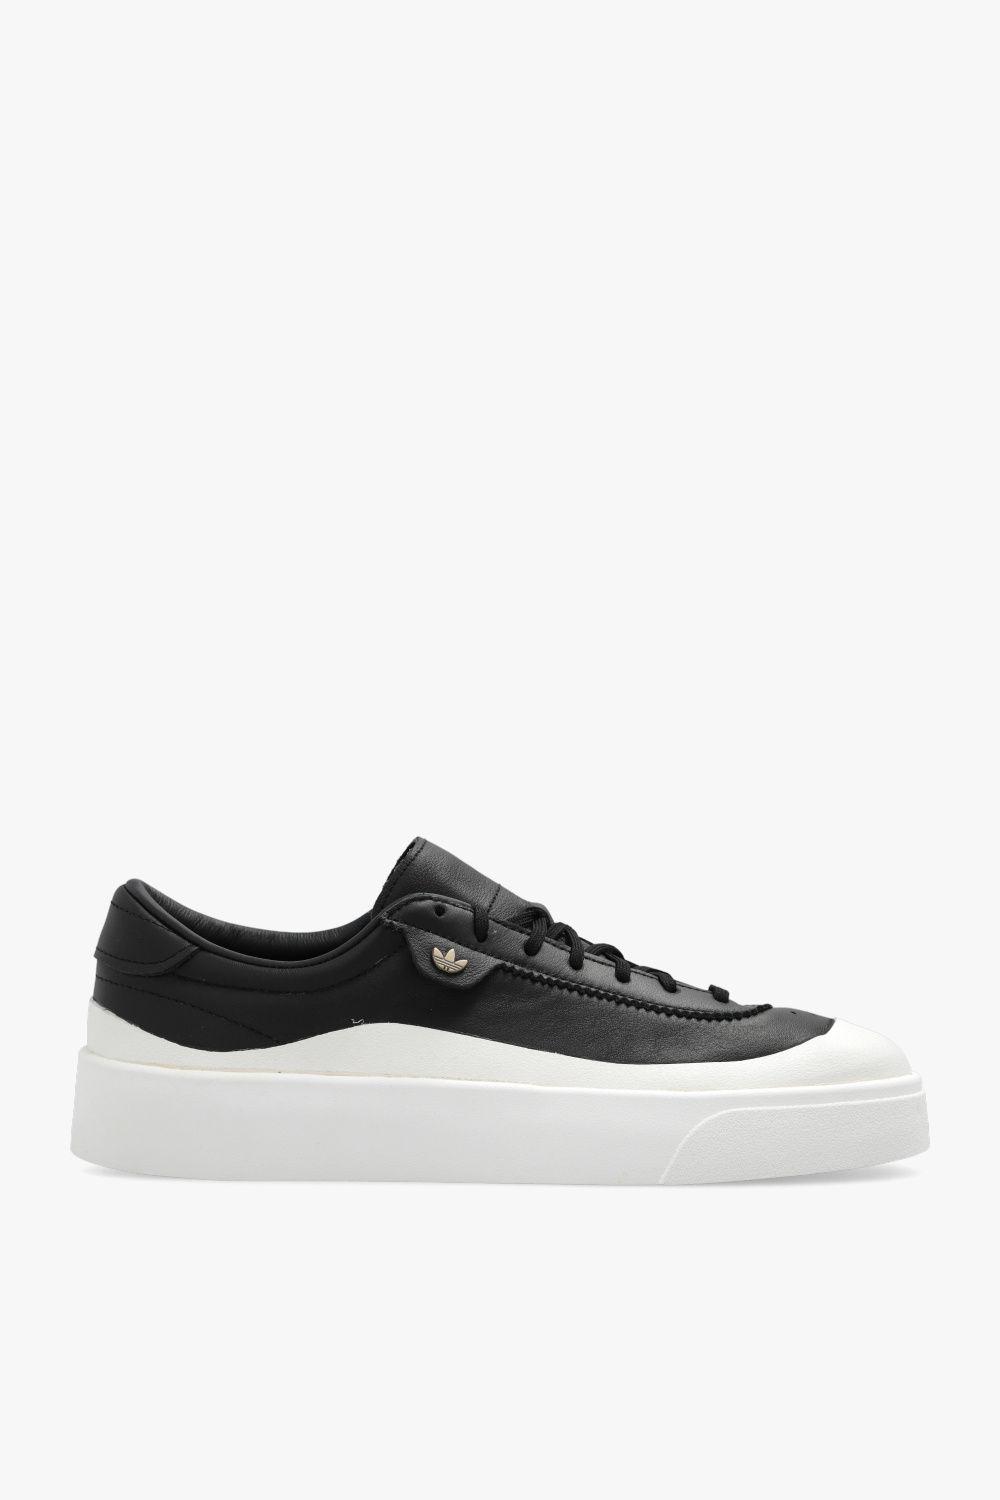 adidas Originals 'nucombe' Sneakers in Black | Lyst